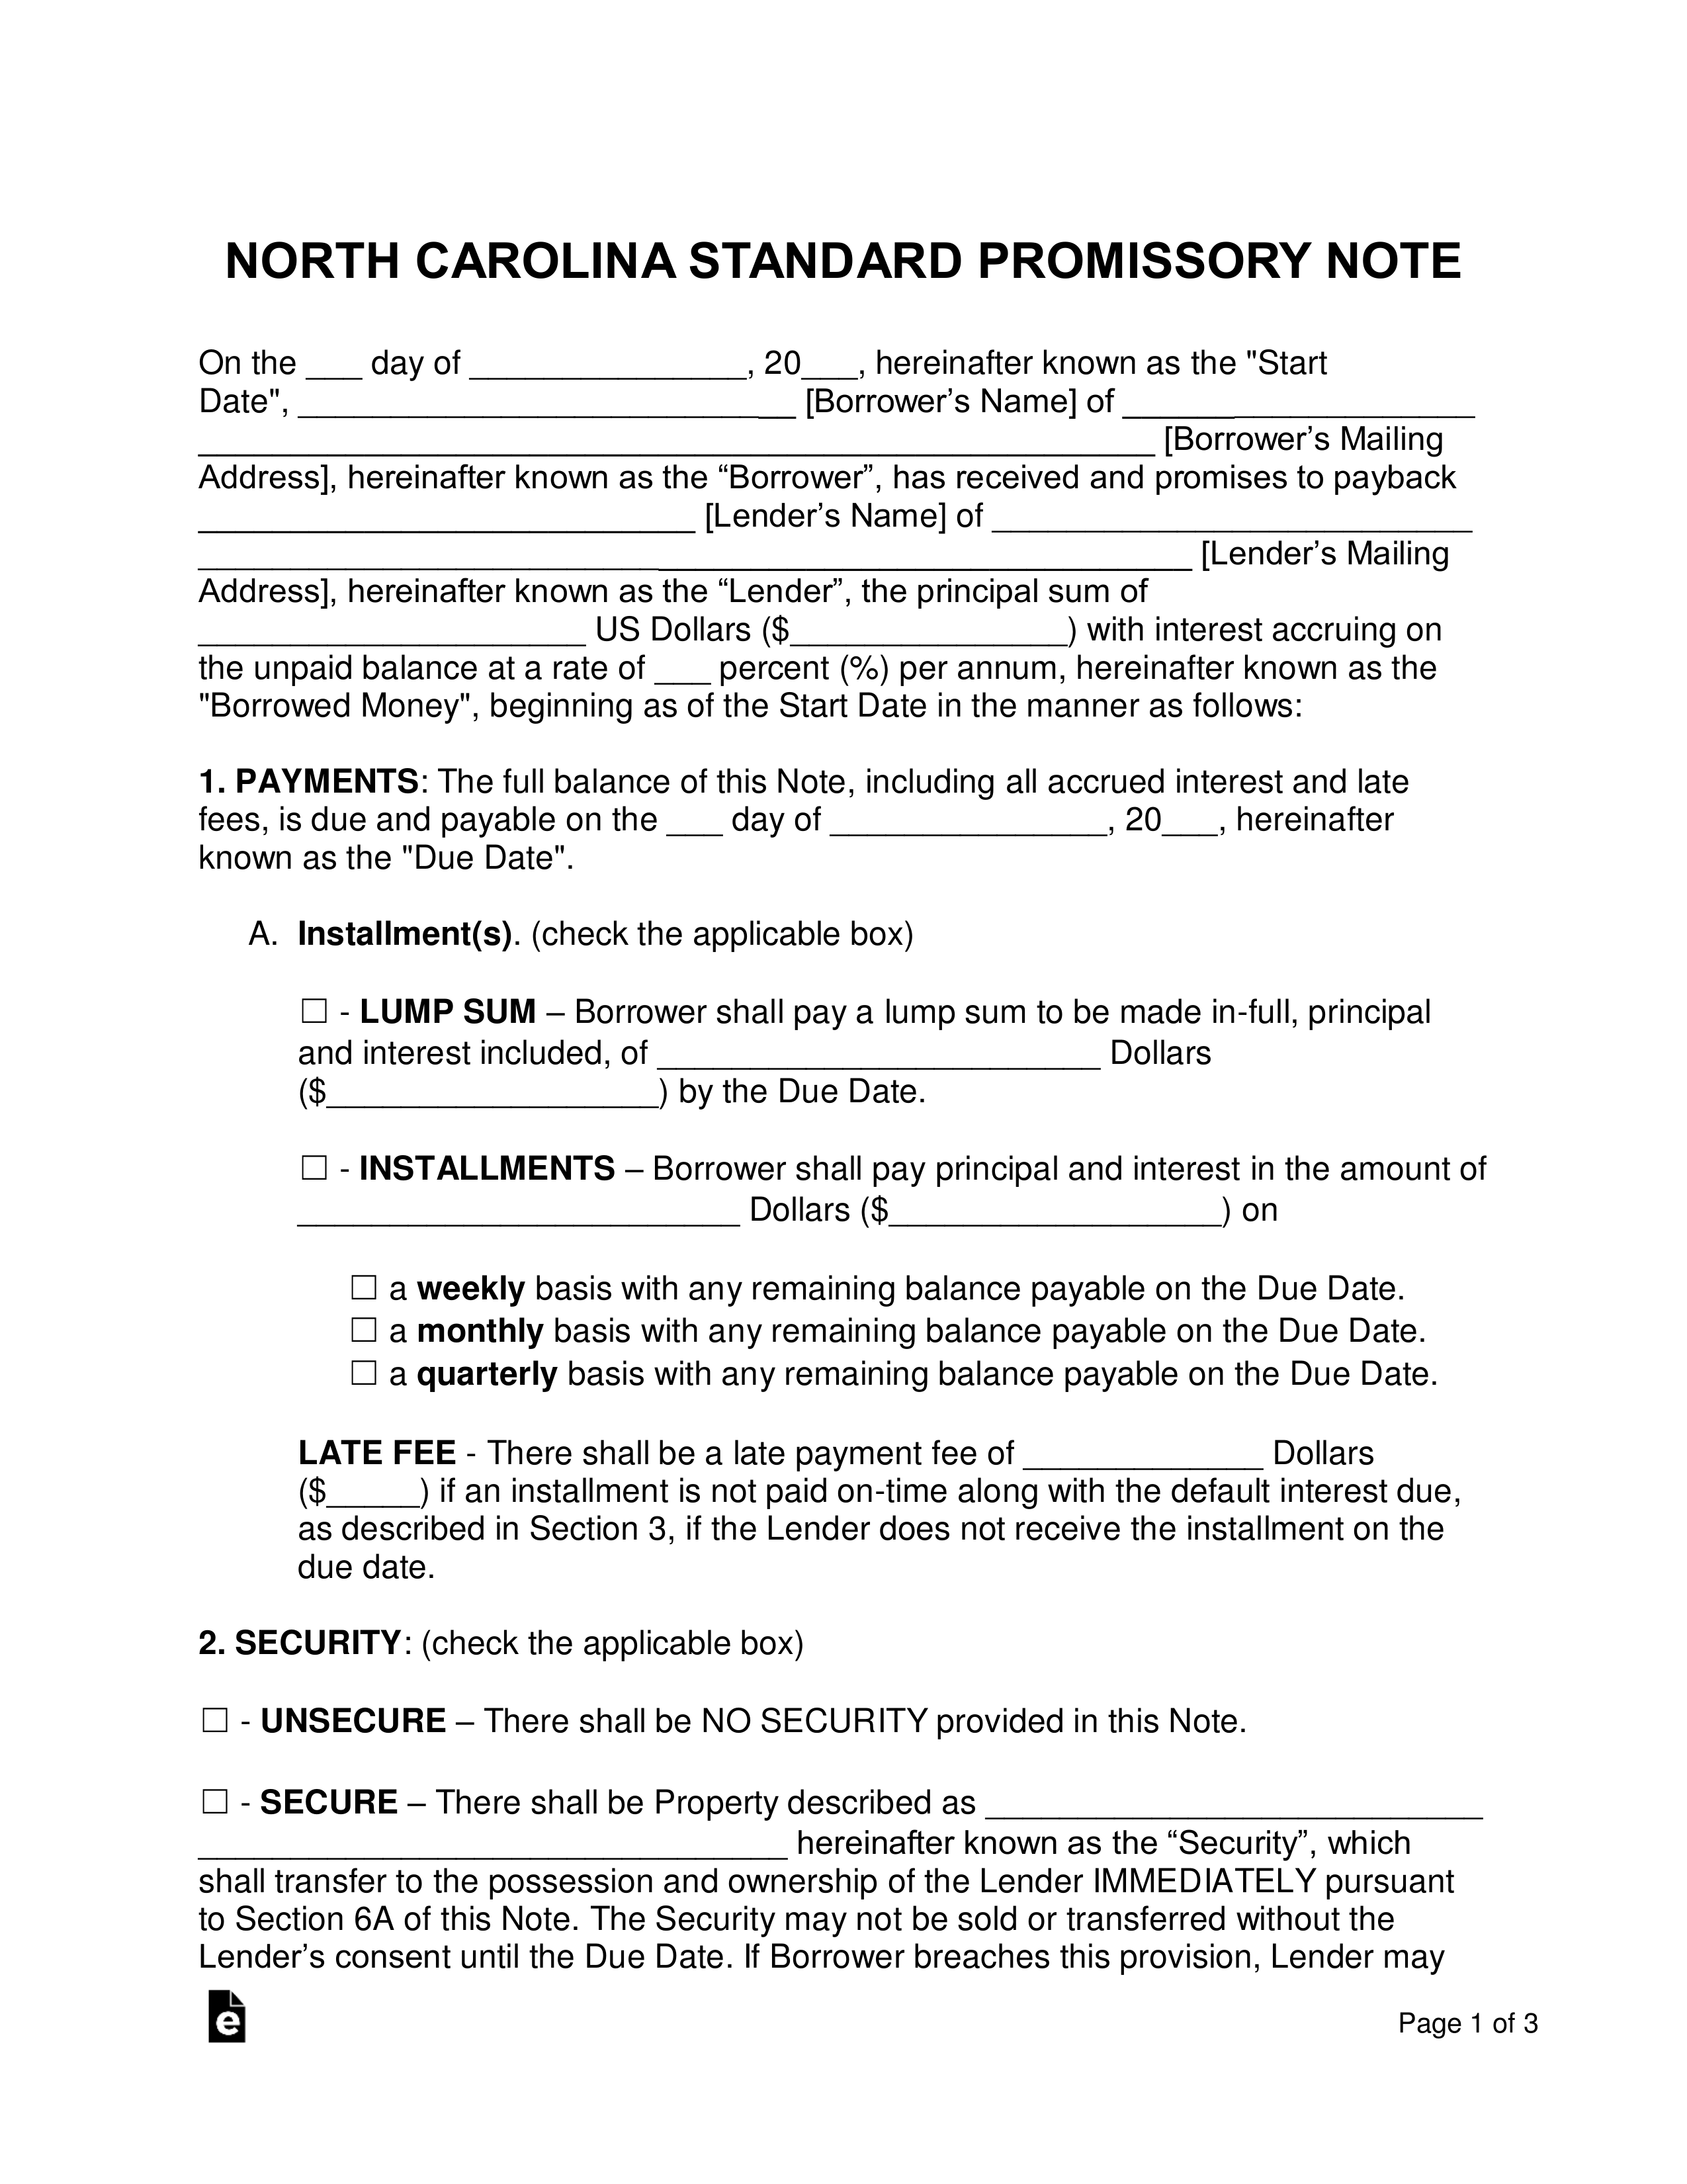 North Carolina Promissory Note Templates (2)